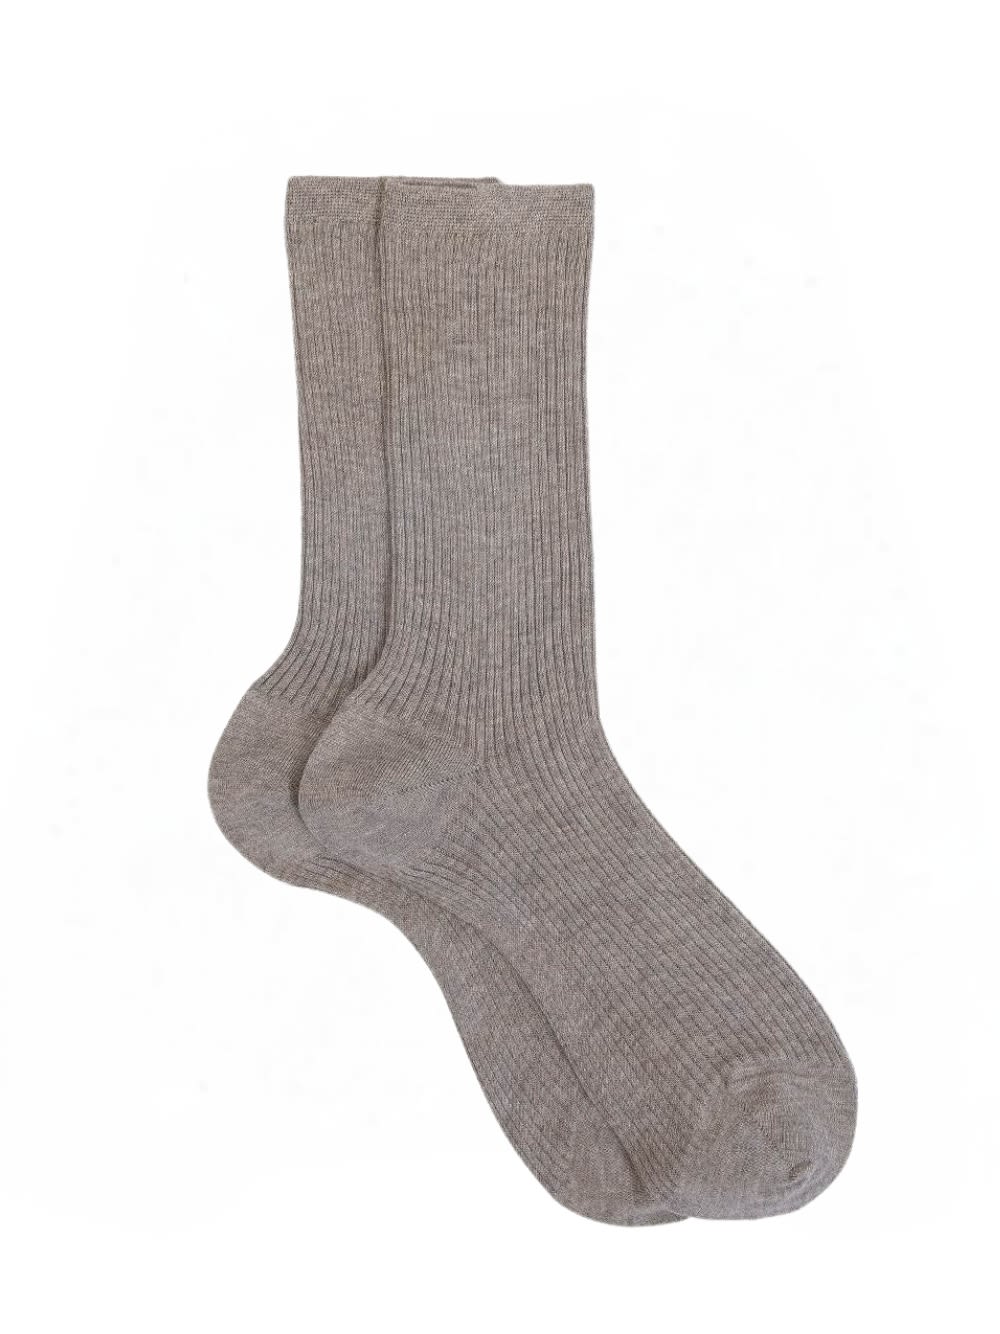 Maria La Rosa Wd013un4008 Socks In Light Grey